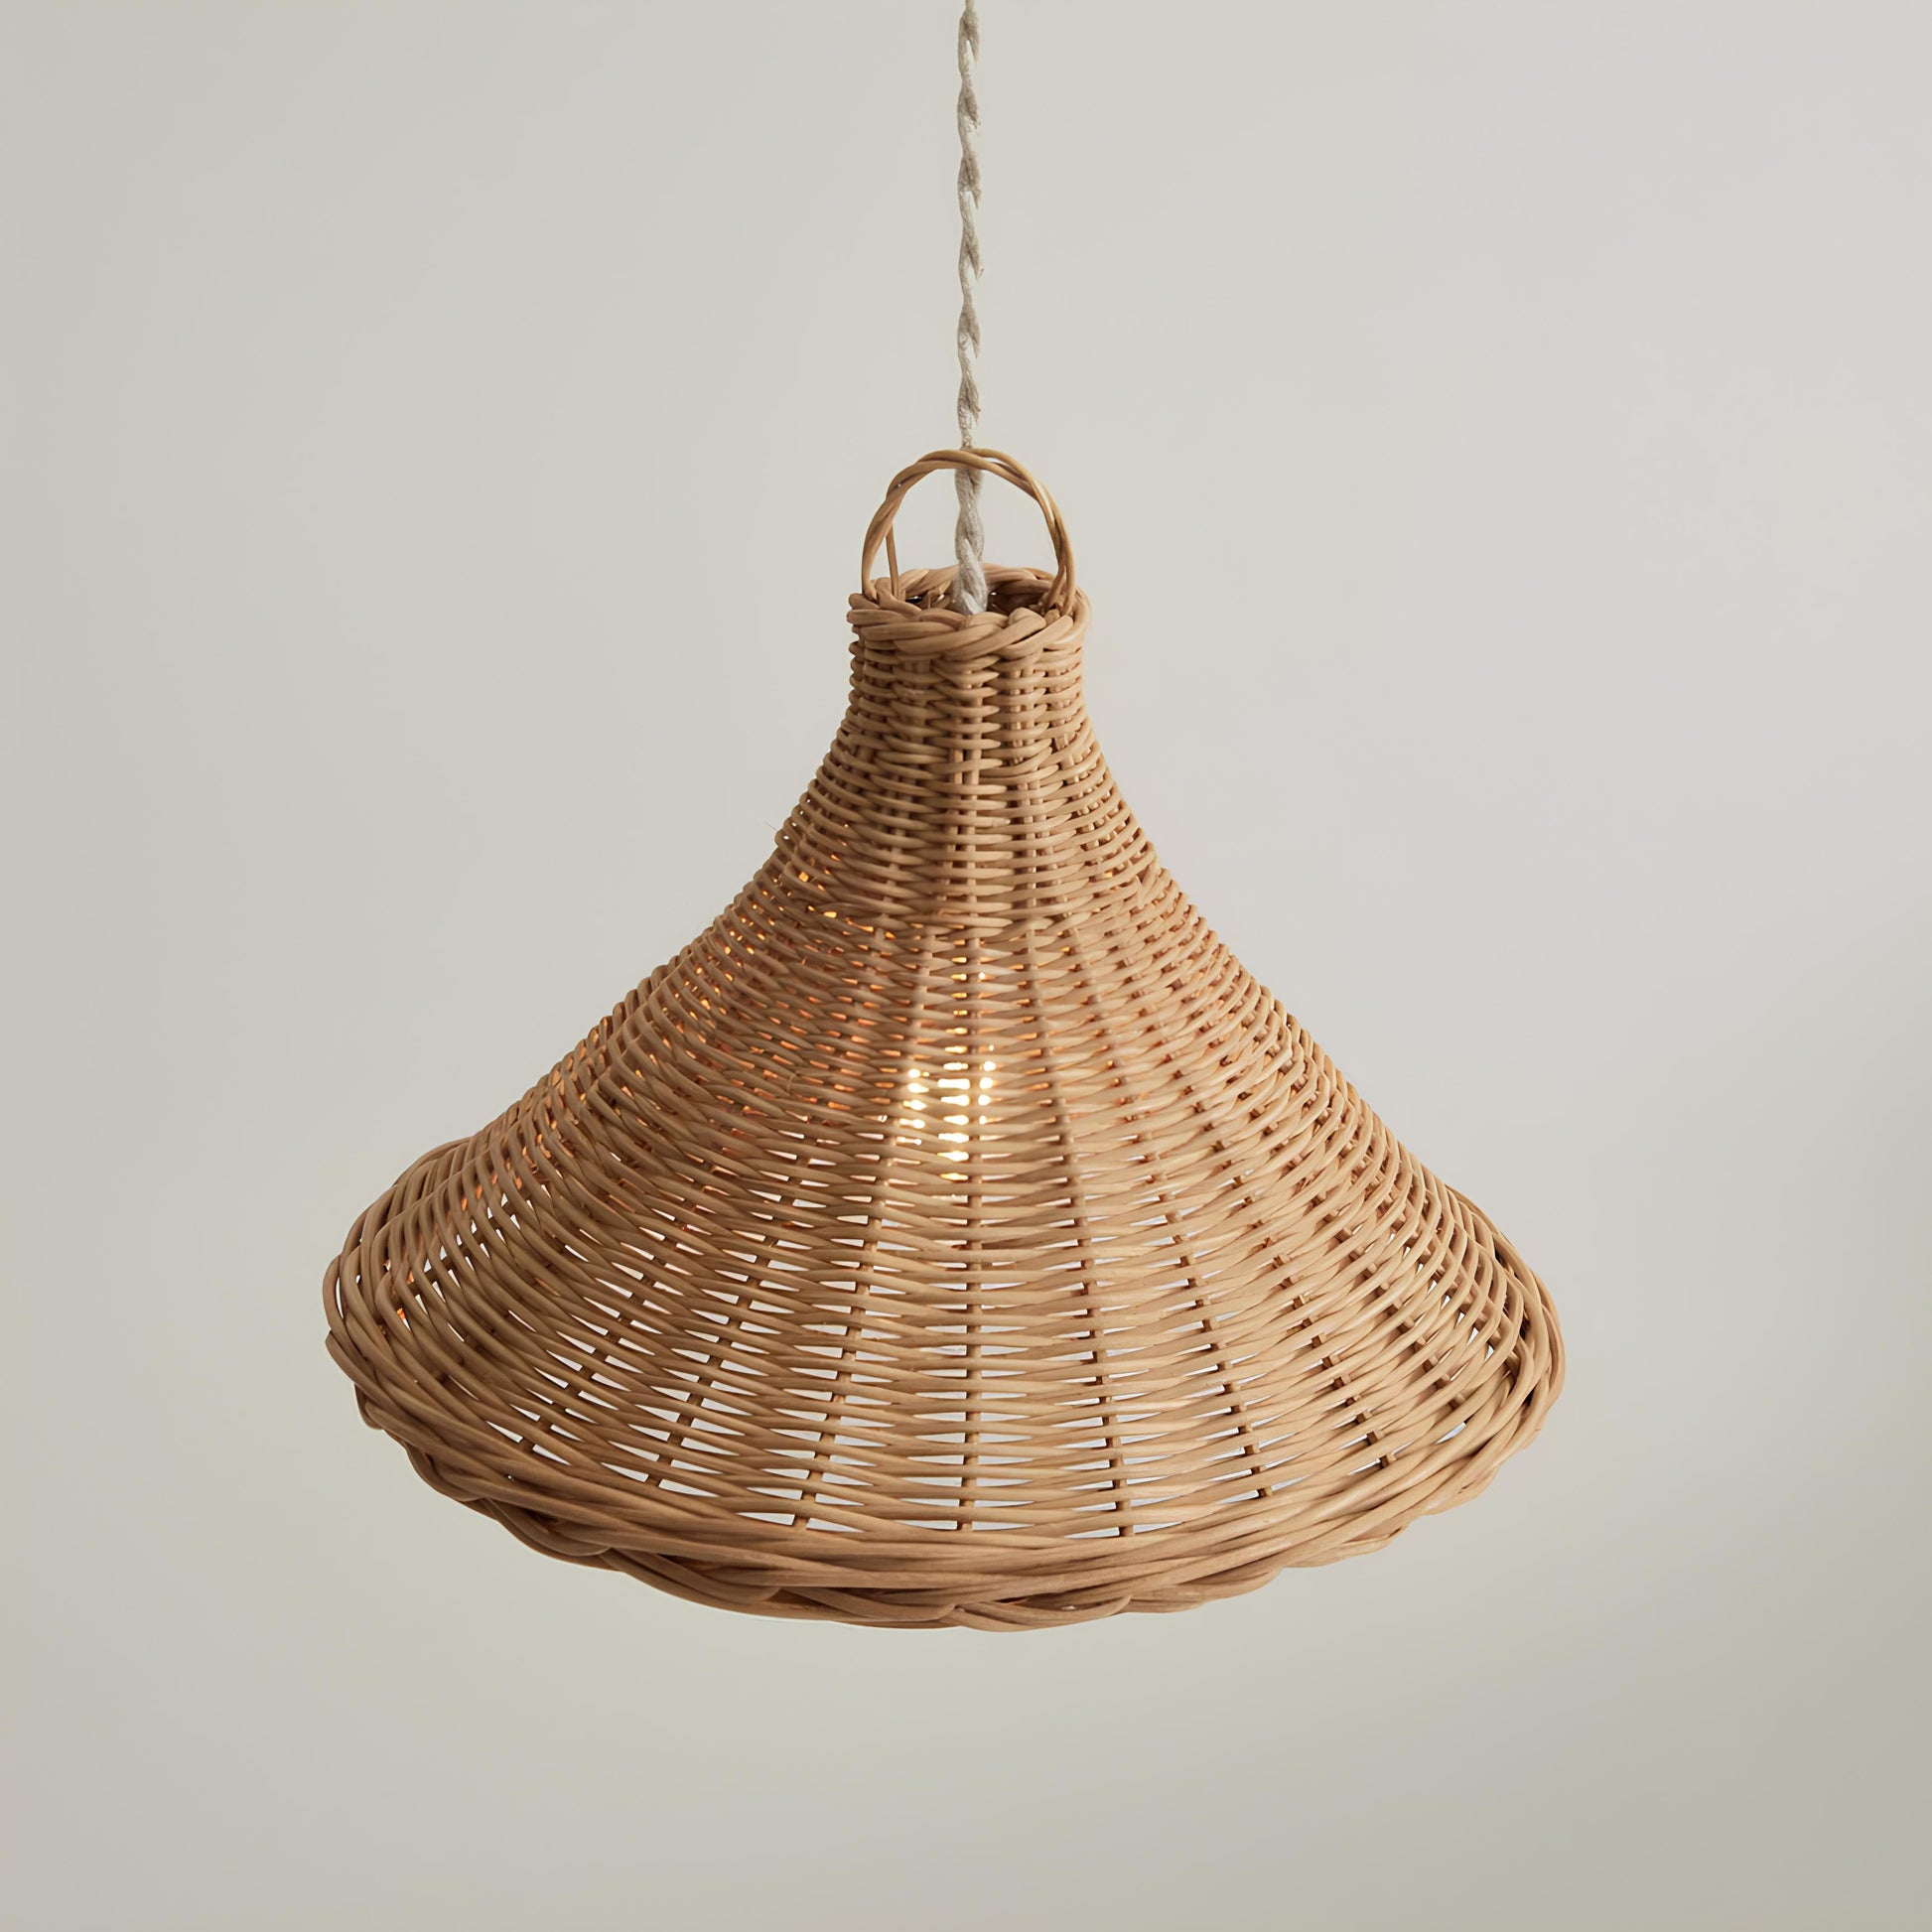 Bamboo Hanging lamp for Living Room | Rattan Pendant light | Cane ceiling light - Hanita - Akway